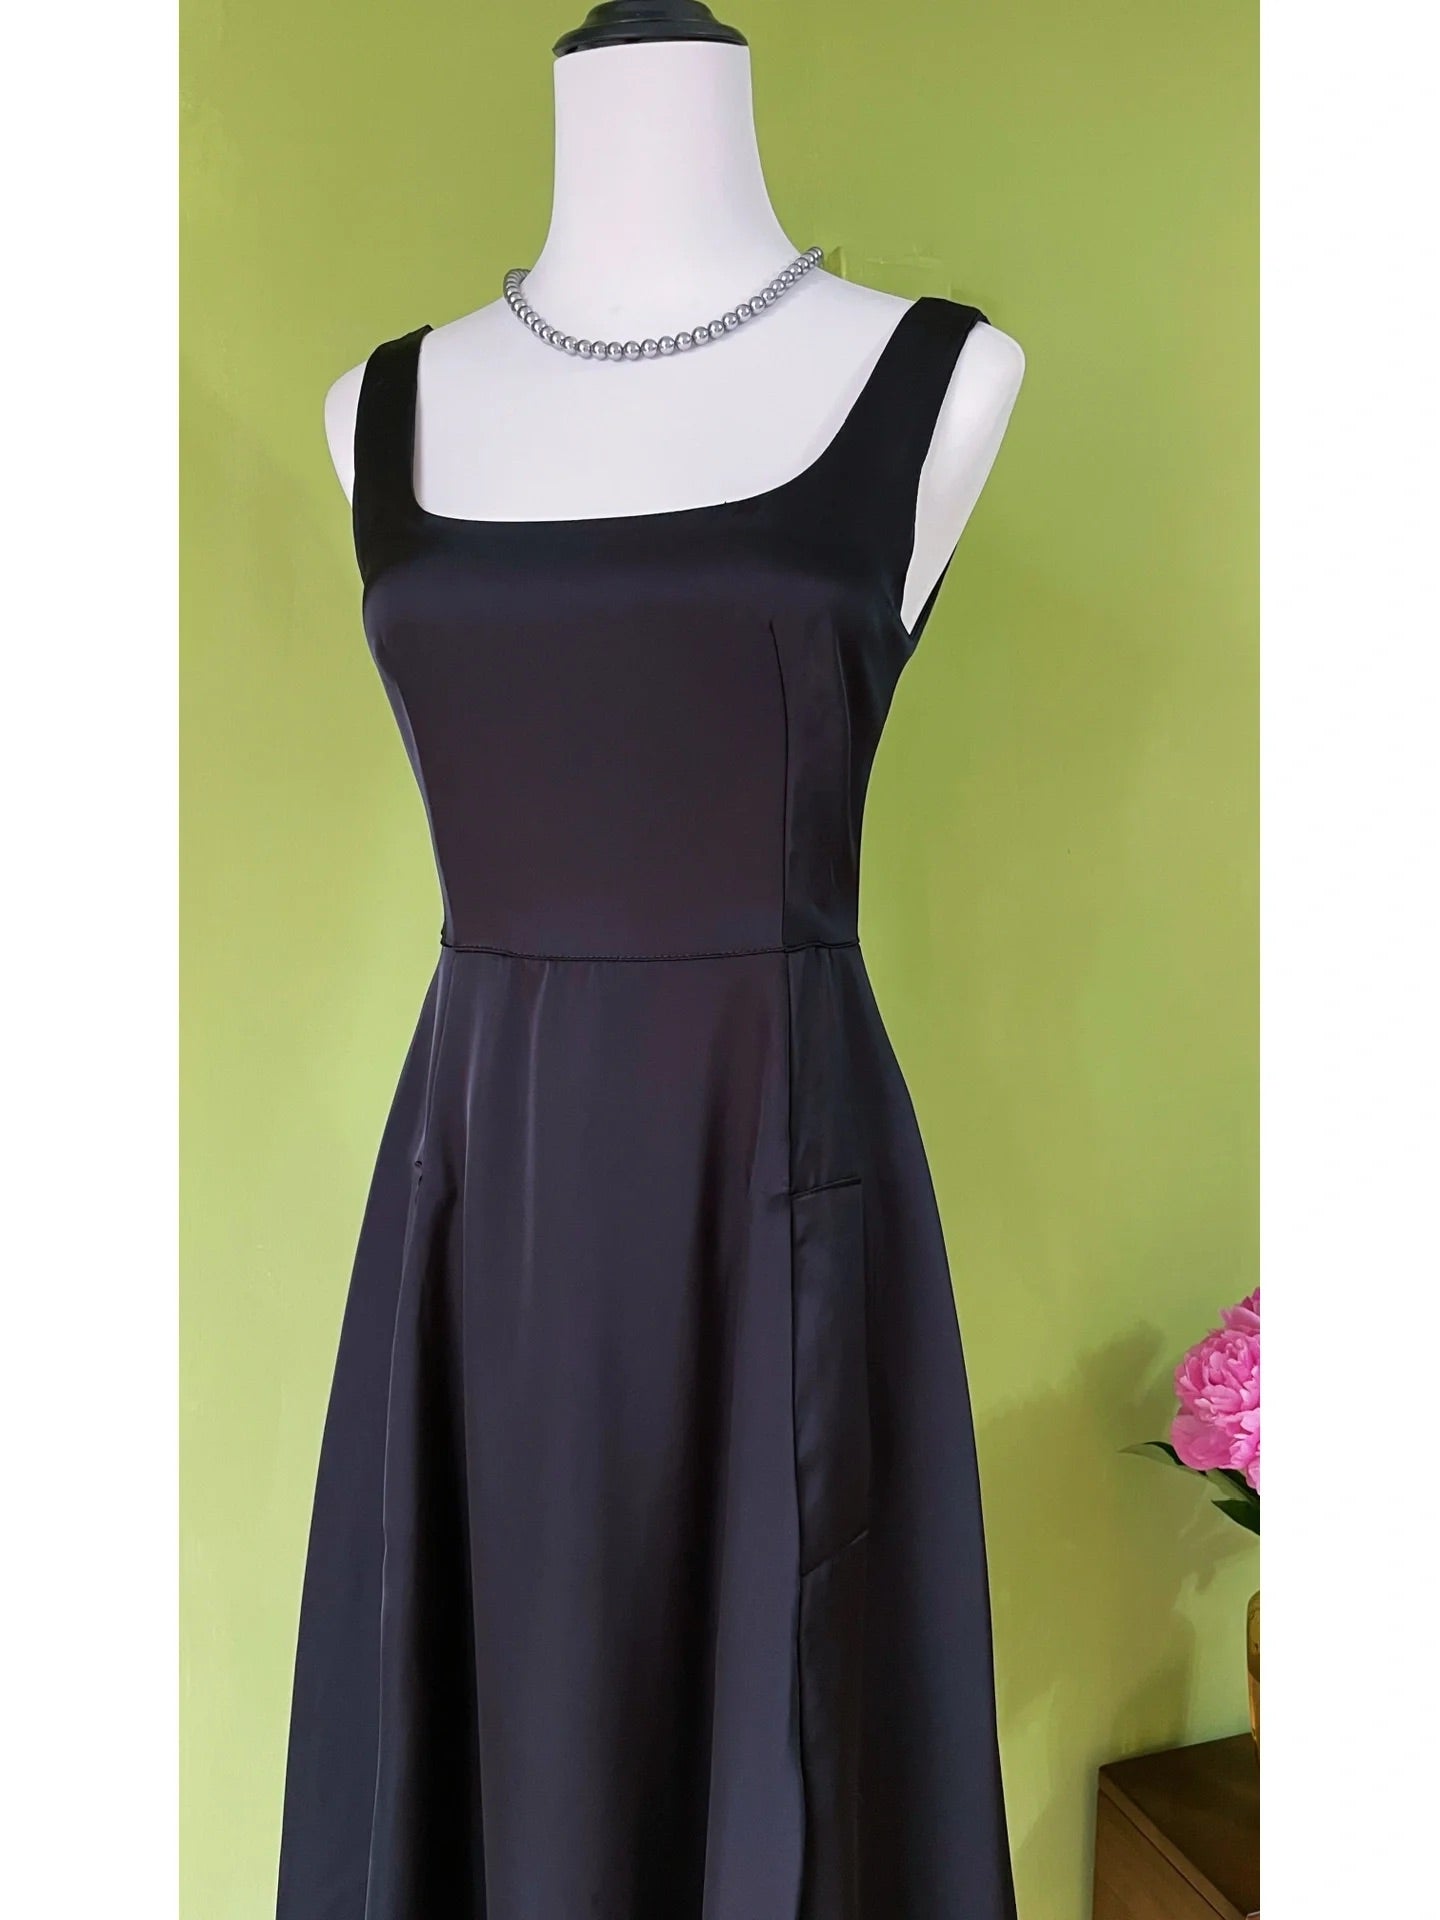 Audrey Hepburn Style Black 50s Vintage Dress with Pockets